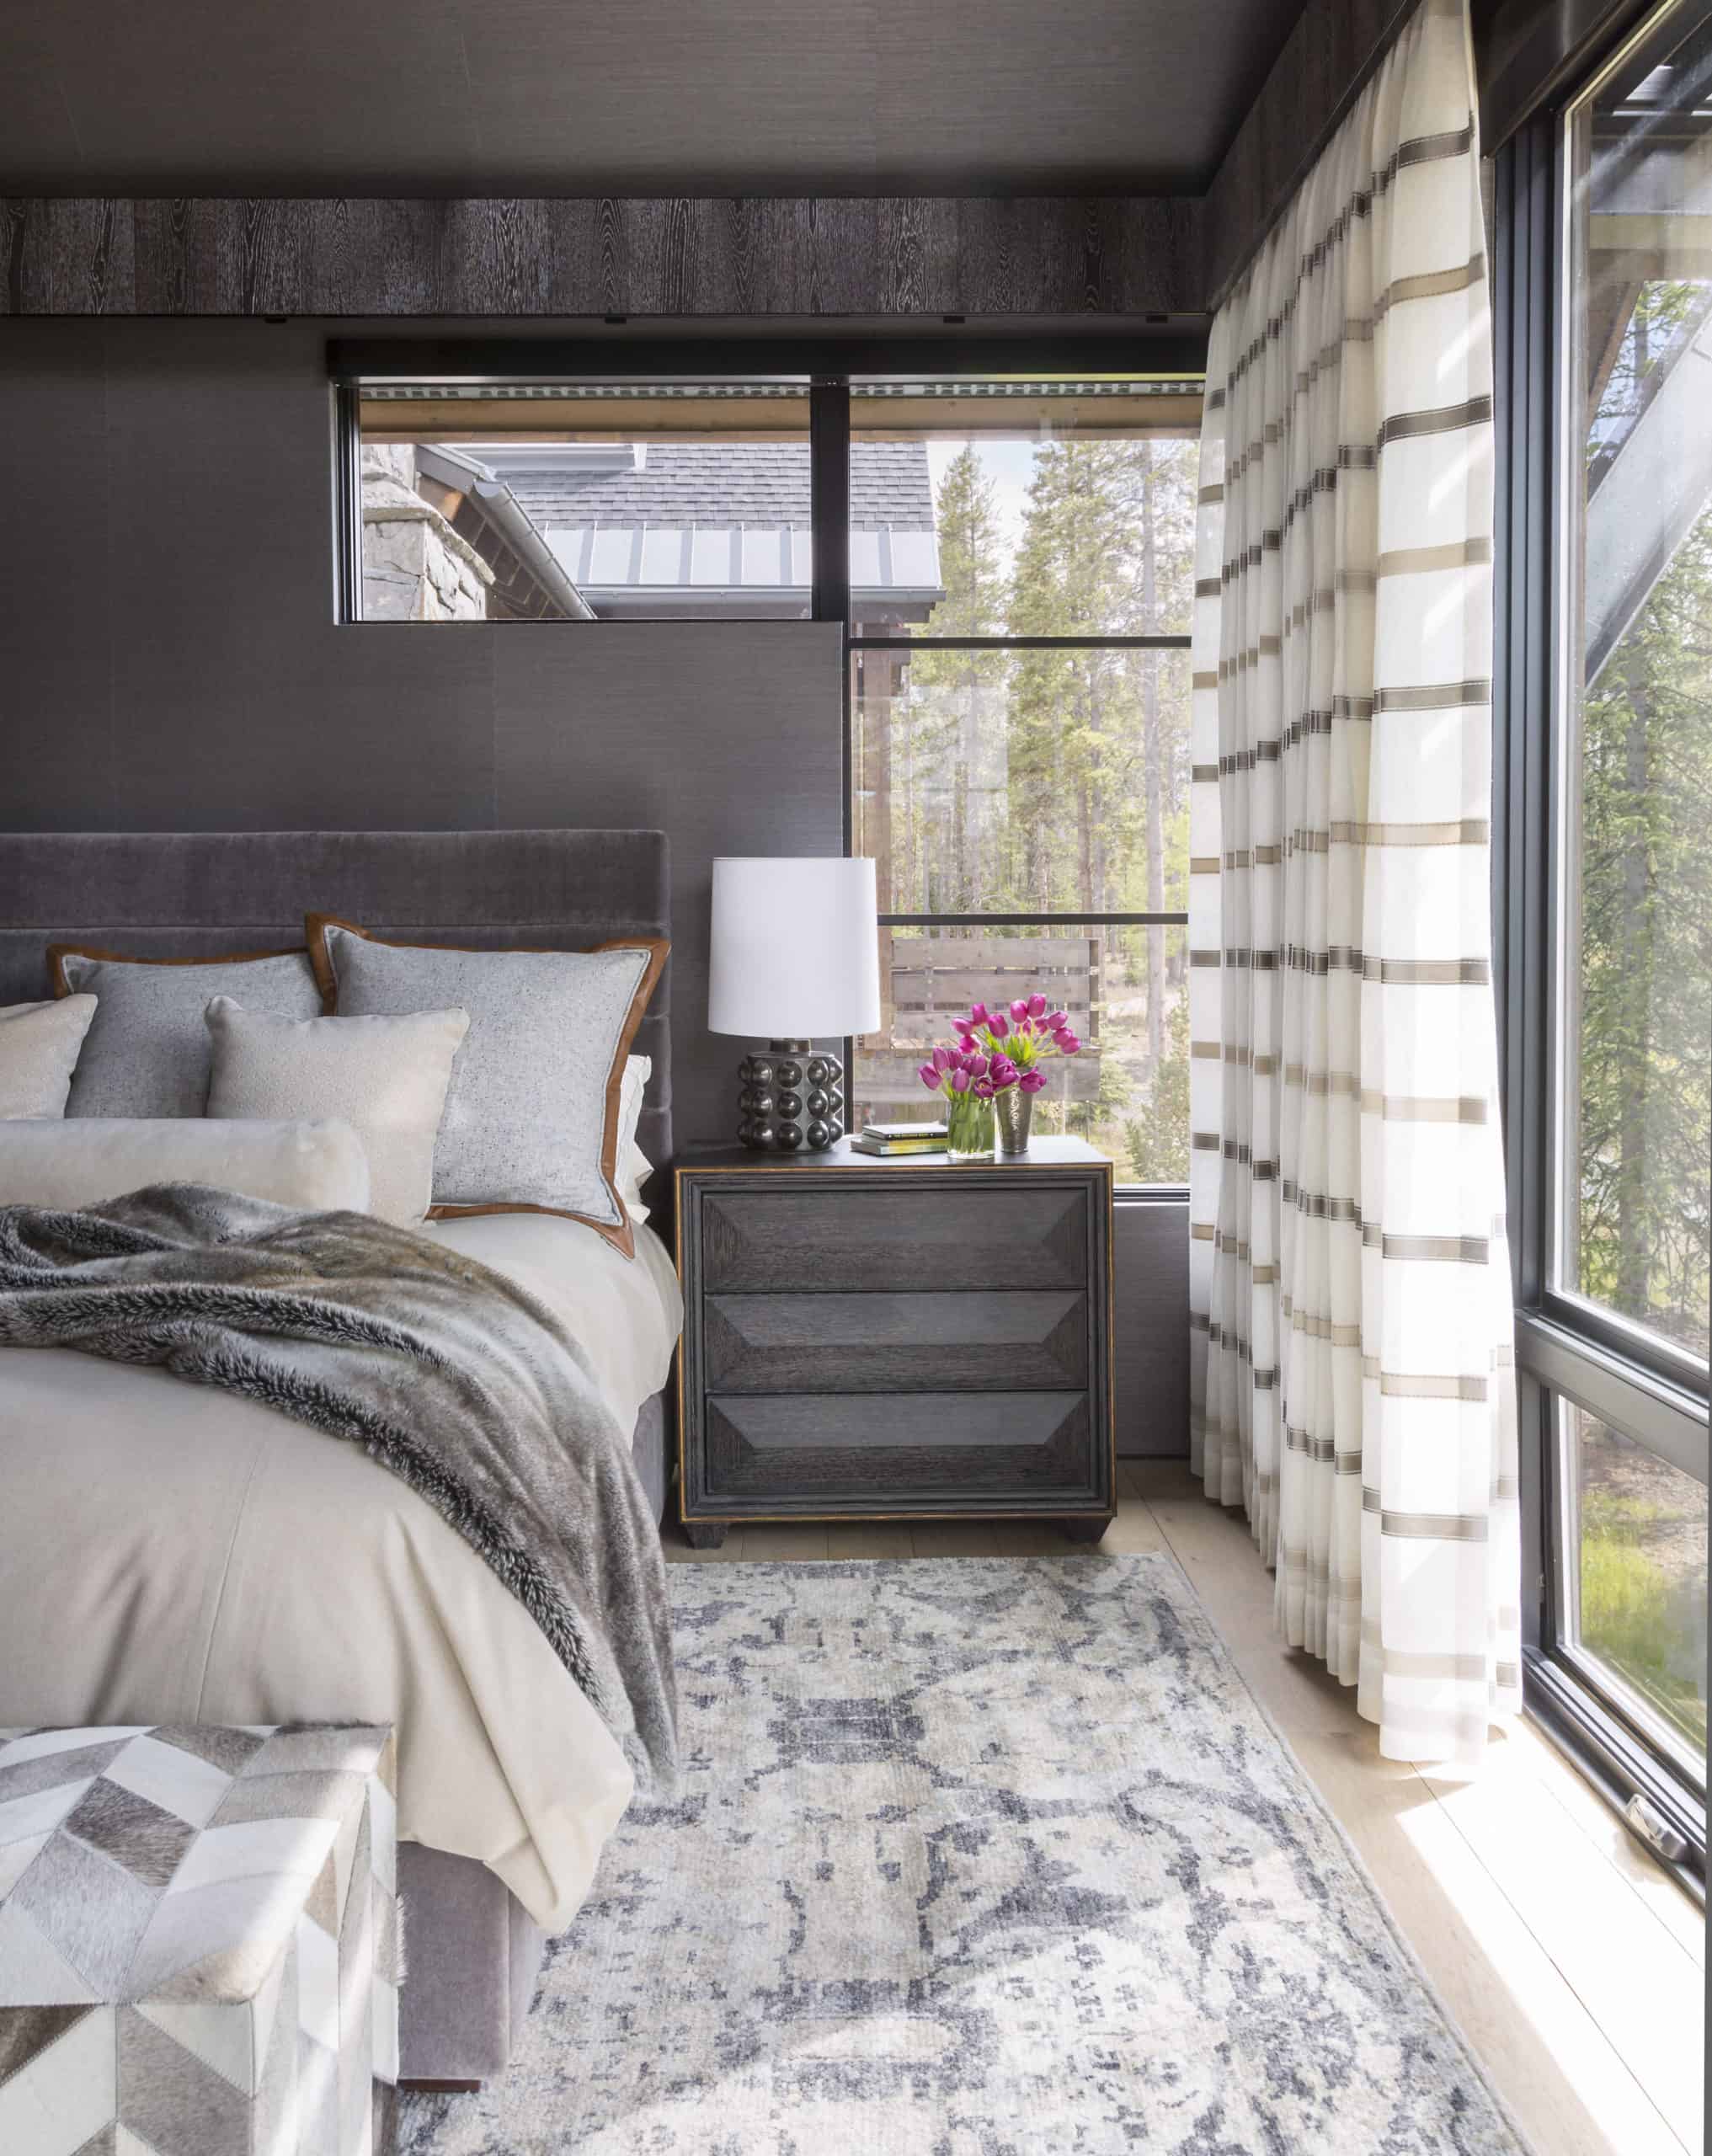 Alpine chic bedroom furniture, grasscloth wallpaper